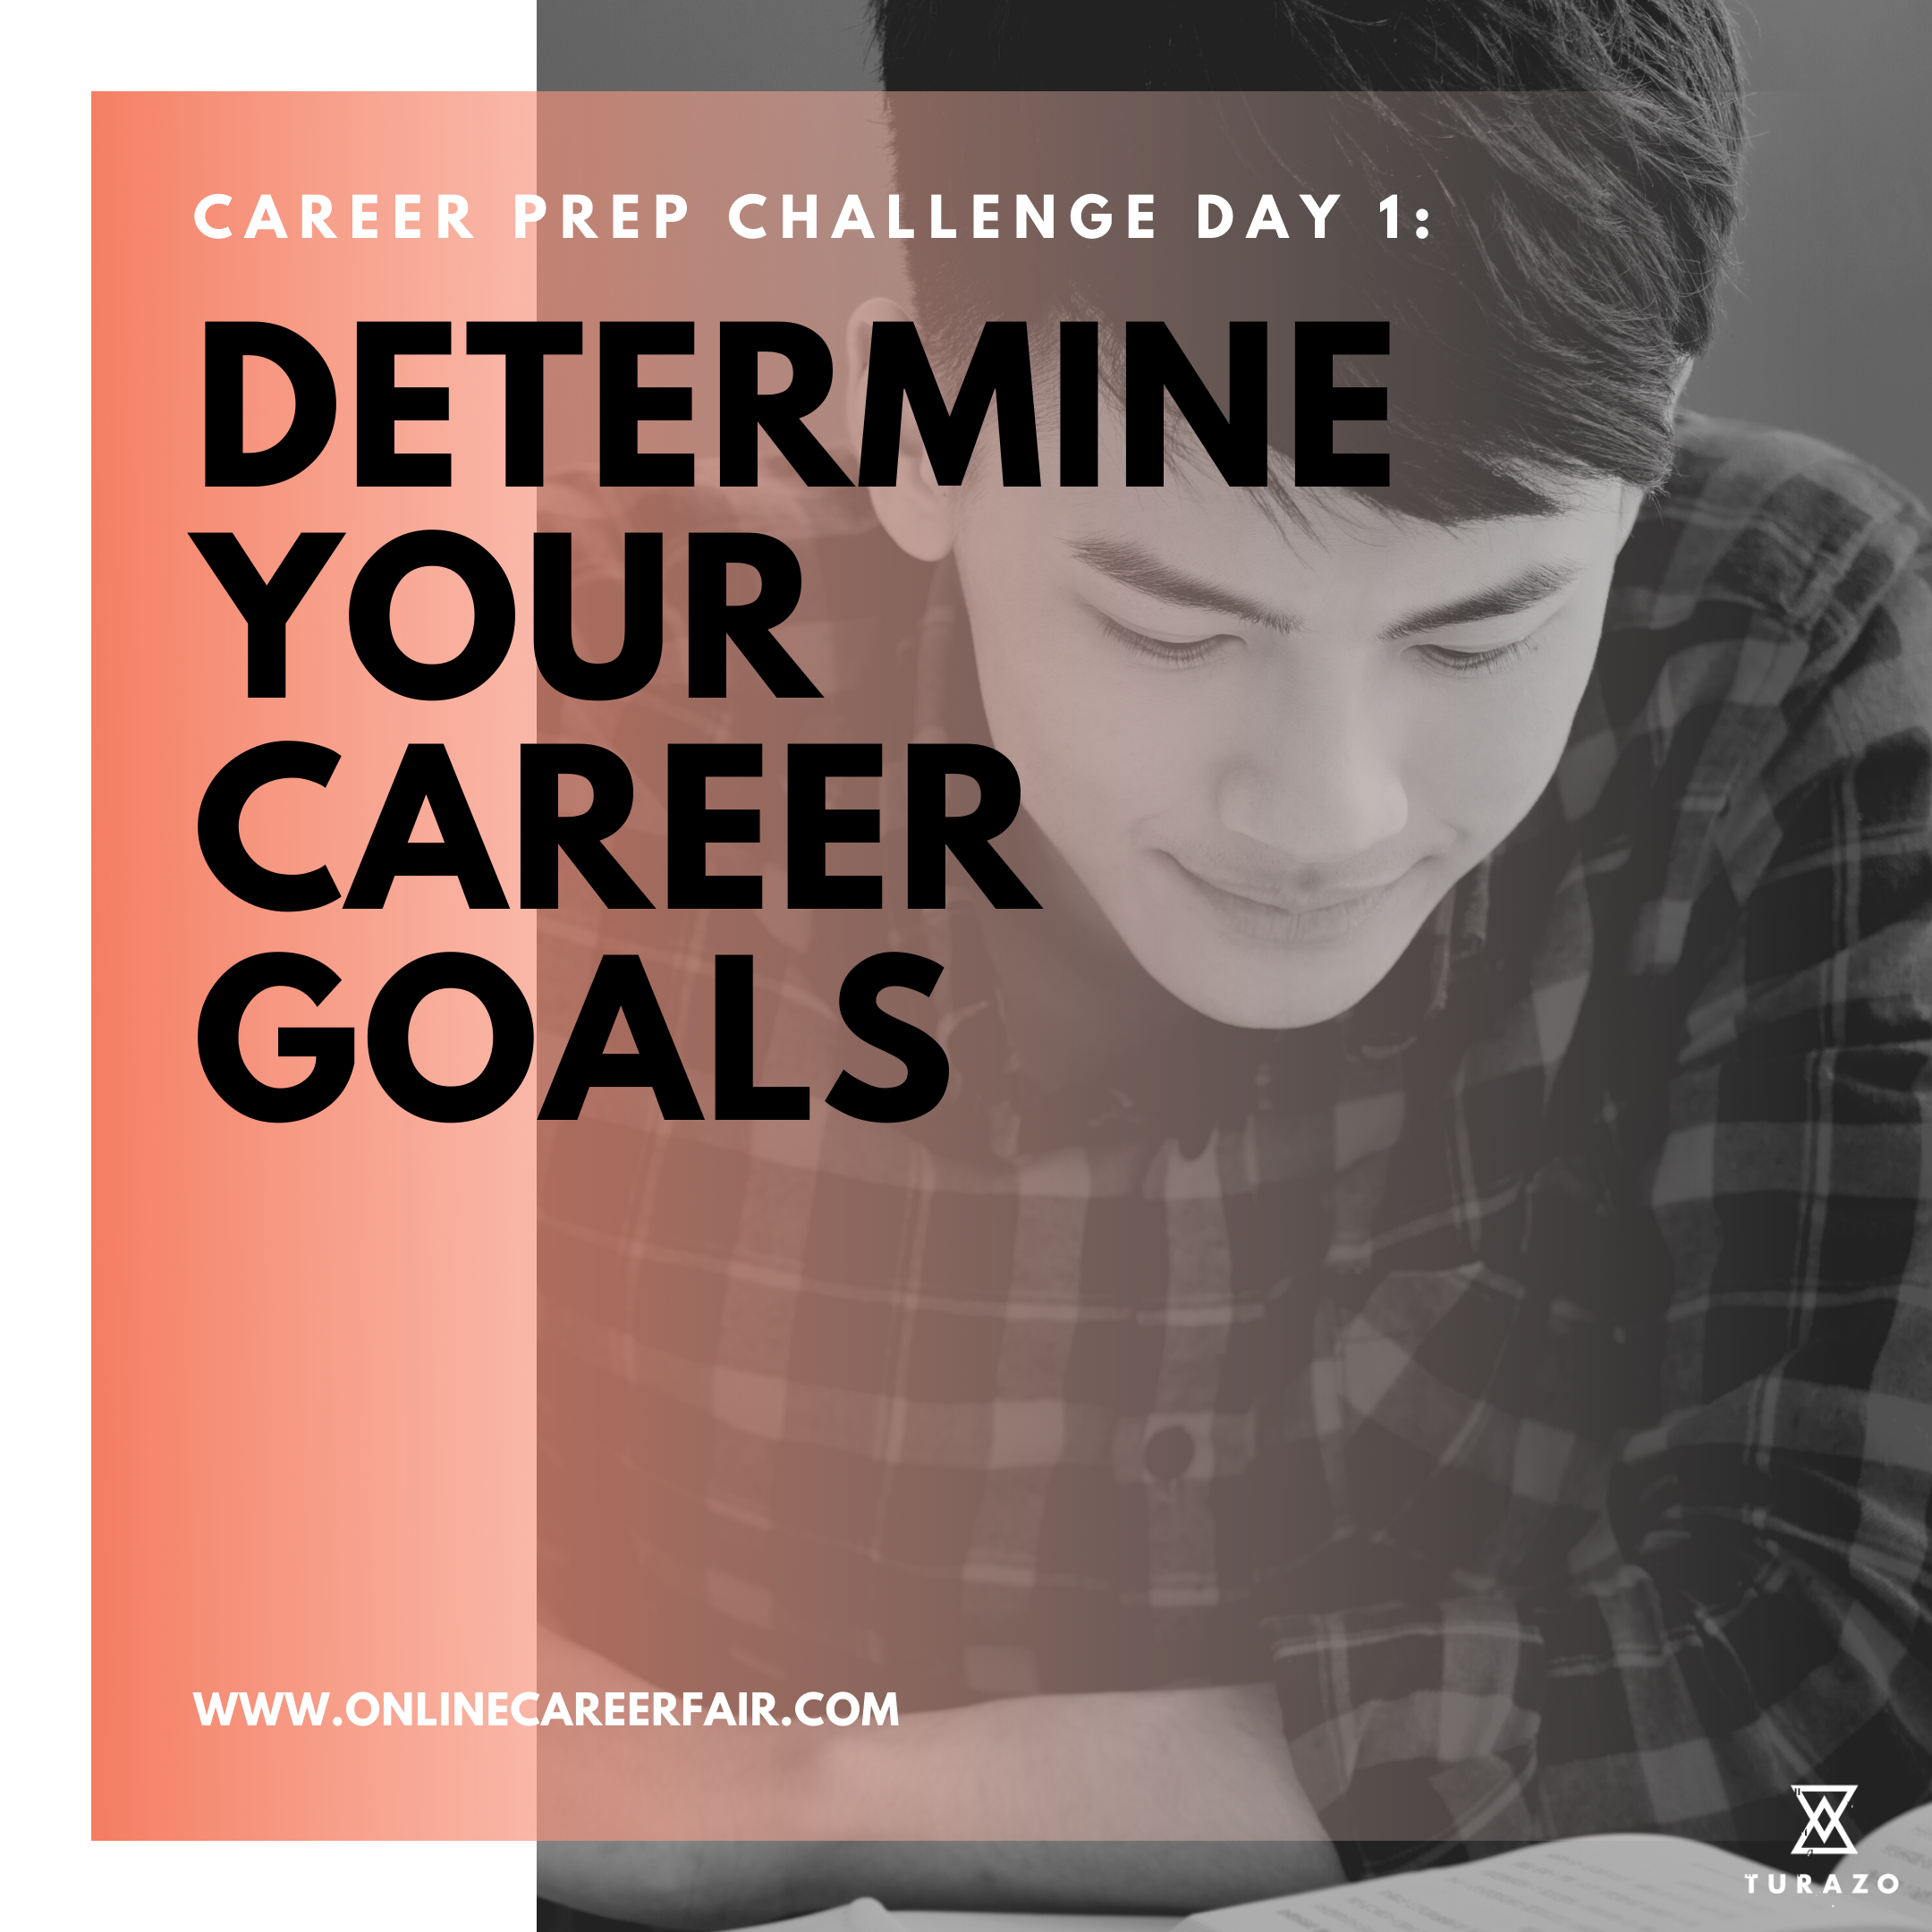 Determine your career goals